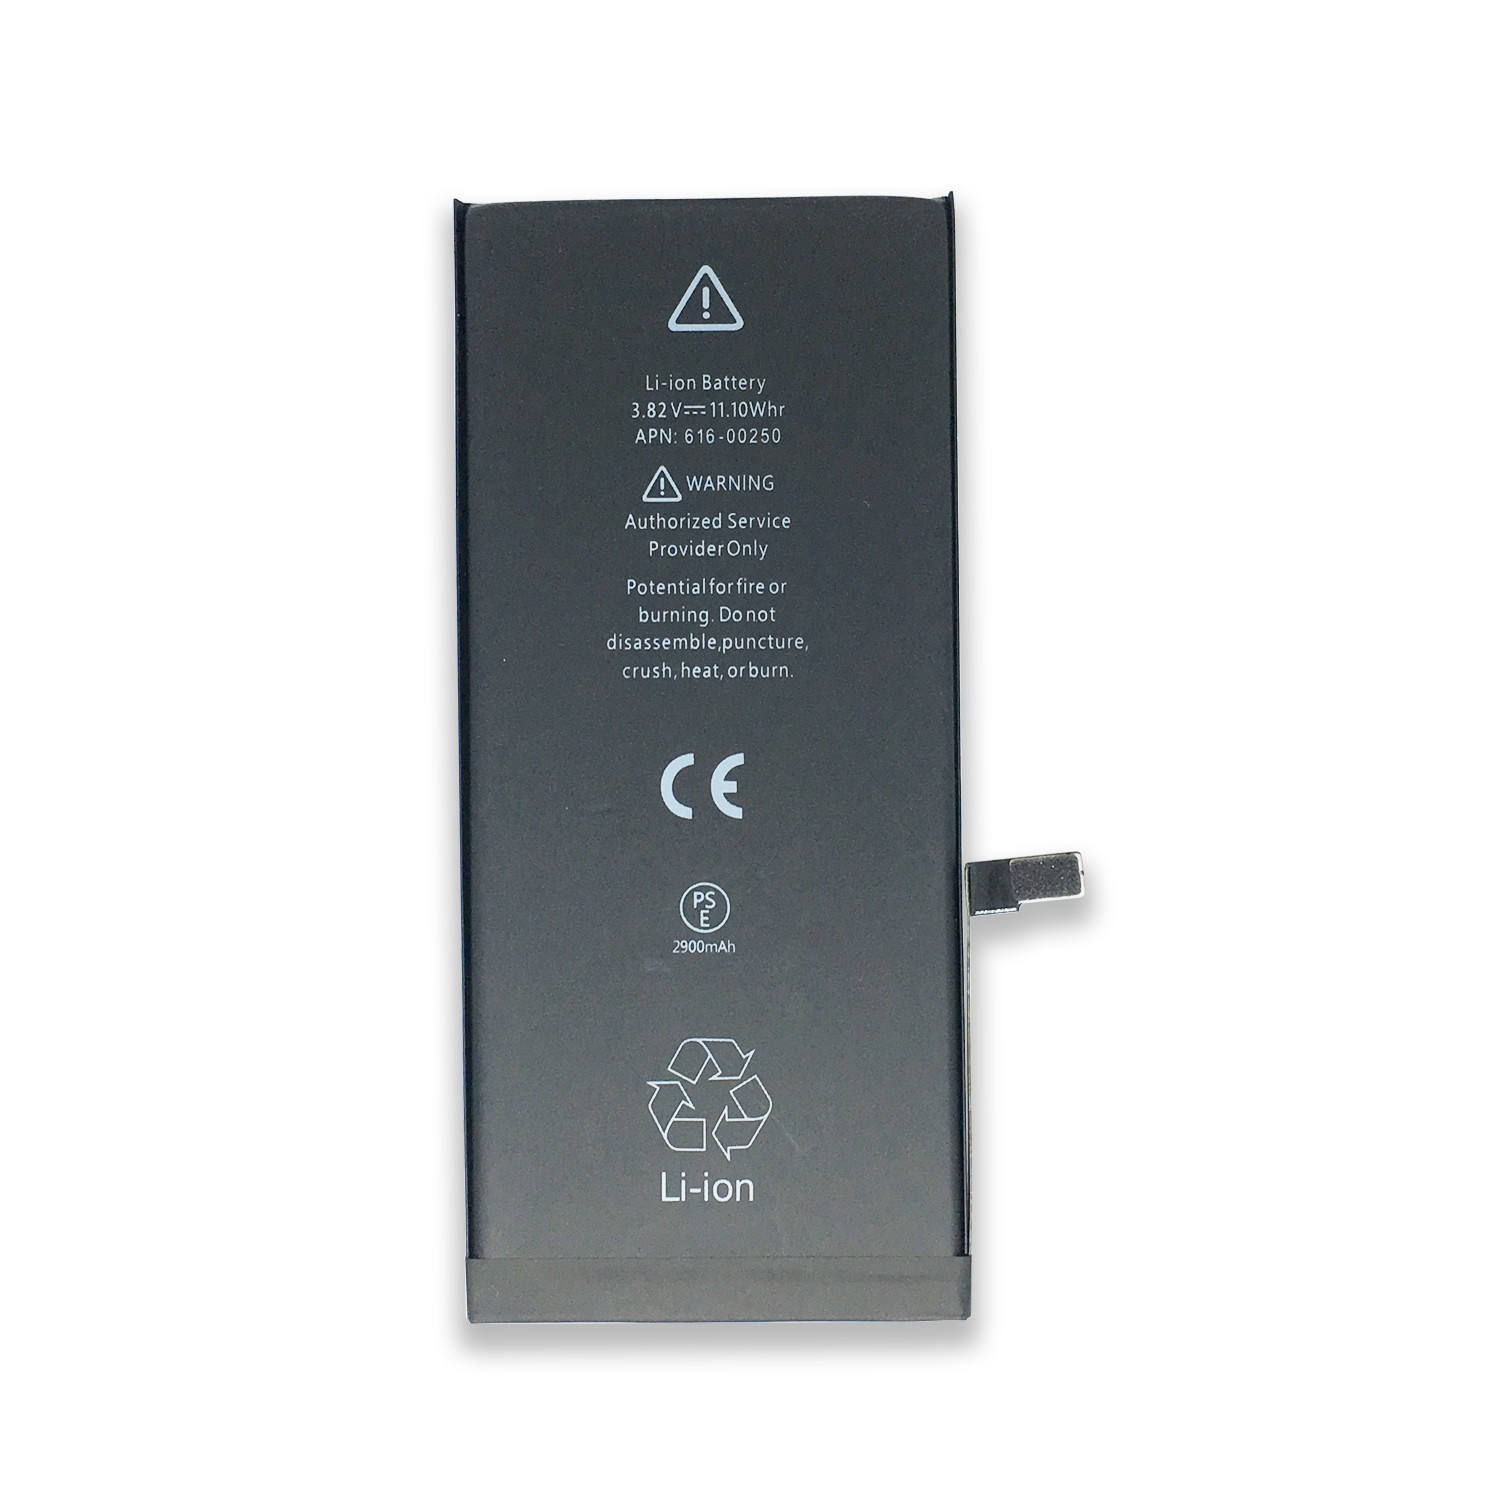 Apple iPhone 7 PLUS Replacement Batteries 2905mAh 3.82V Factory Wholesale